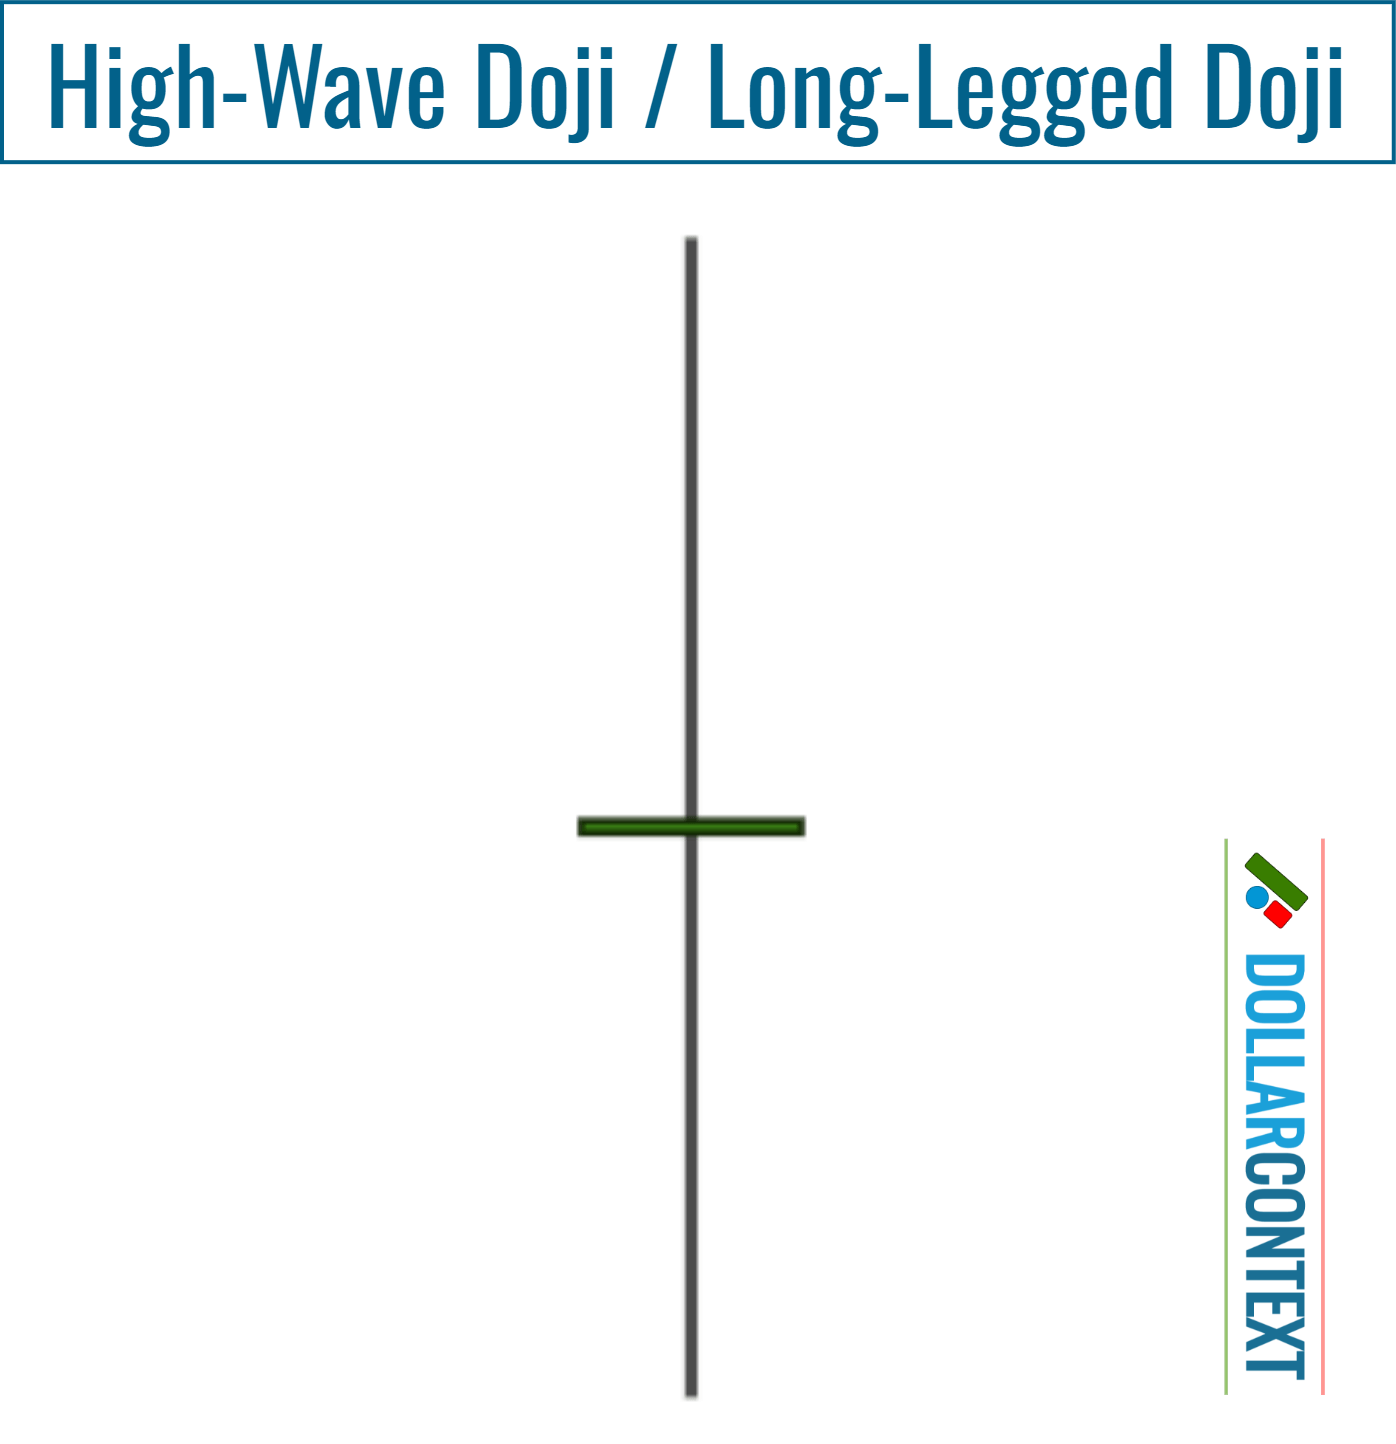 Long-legged Doji or High-Wave Doji